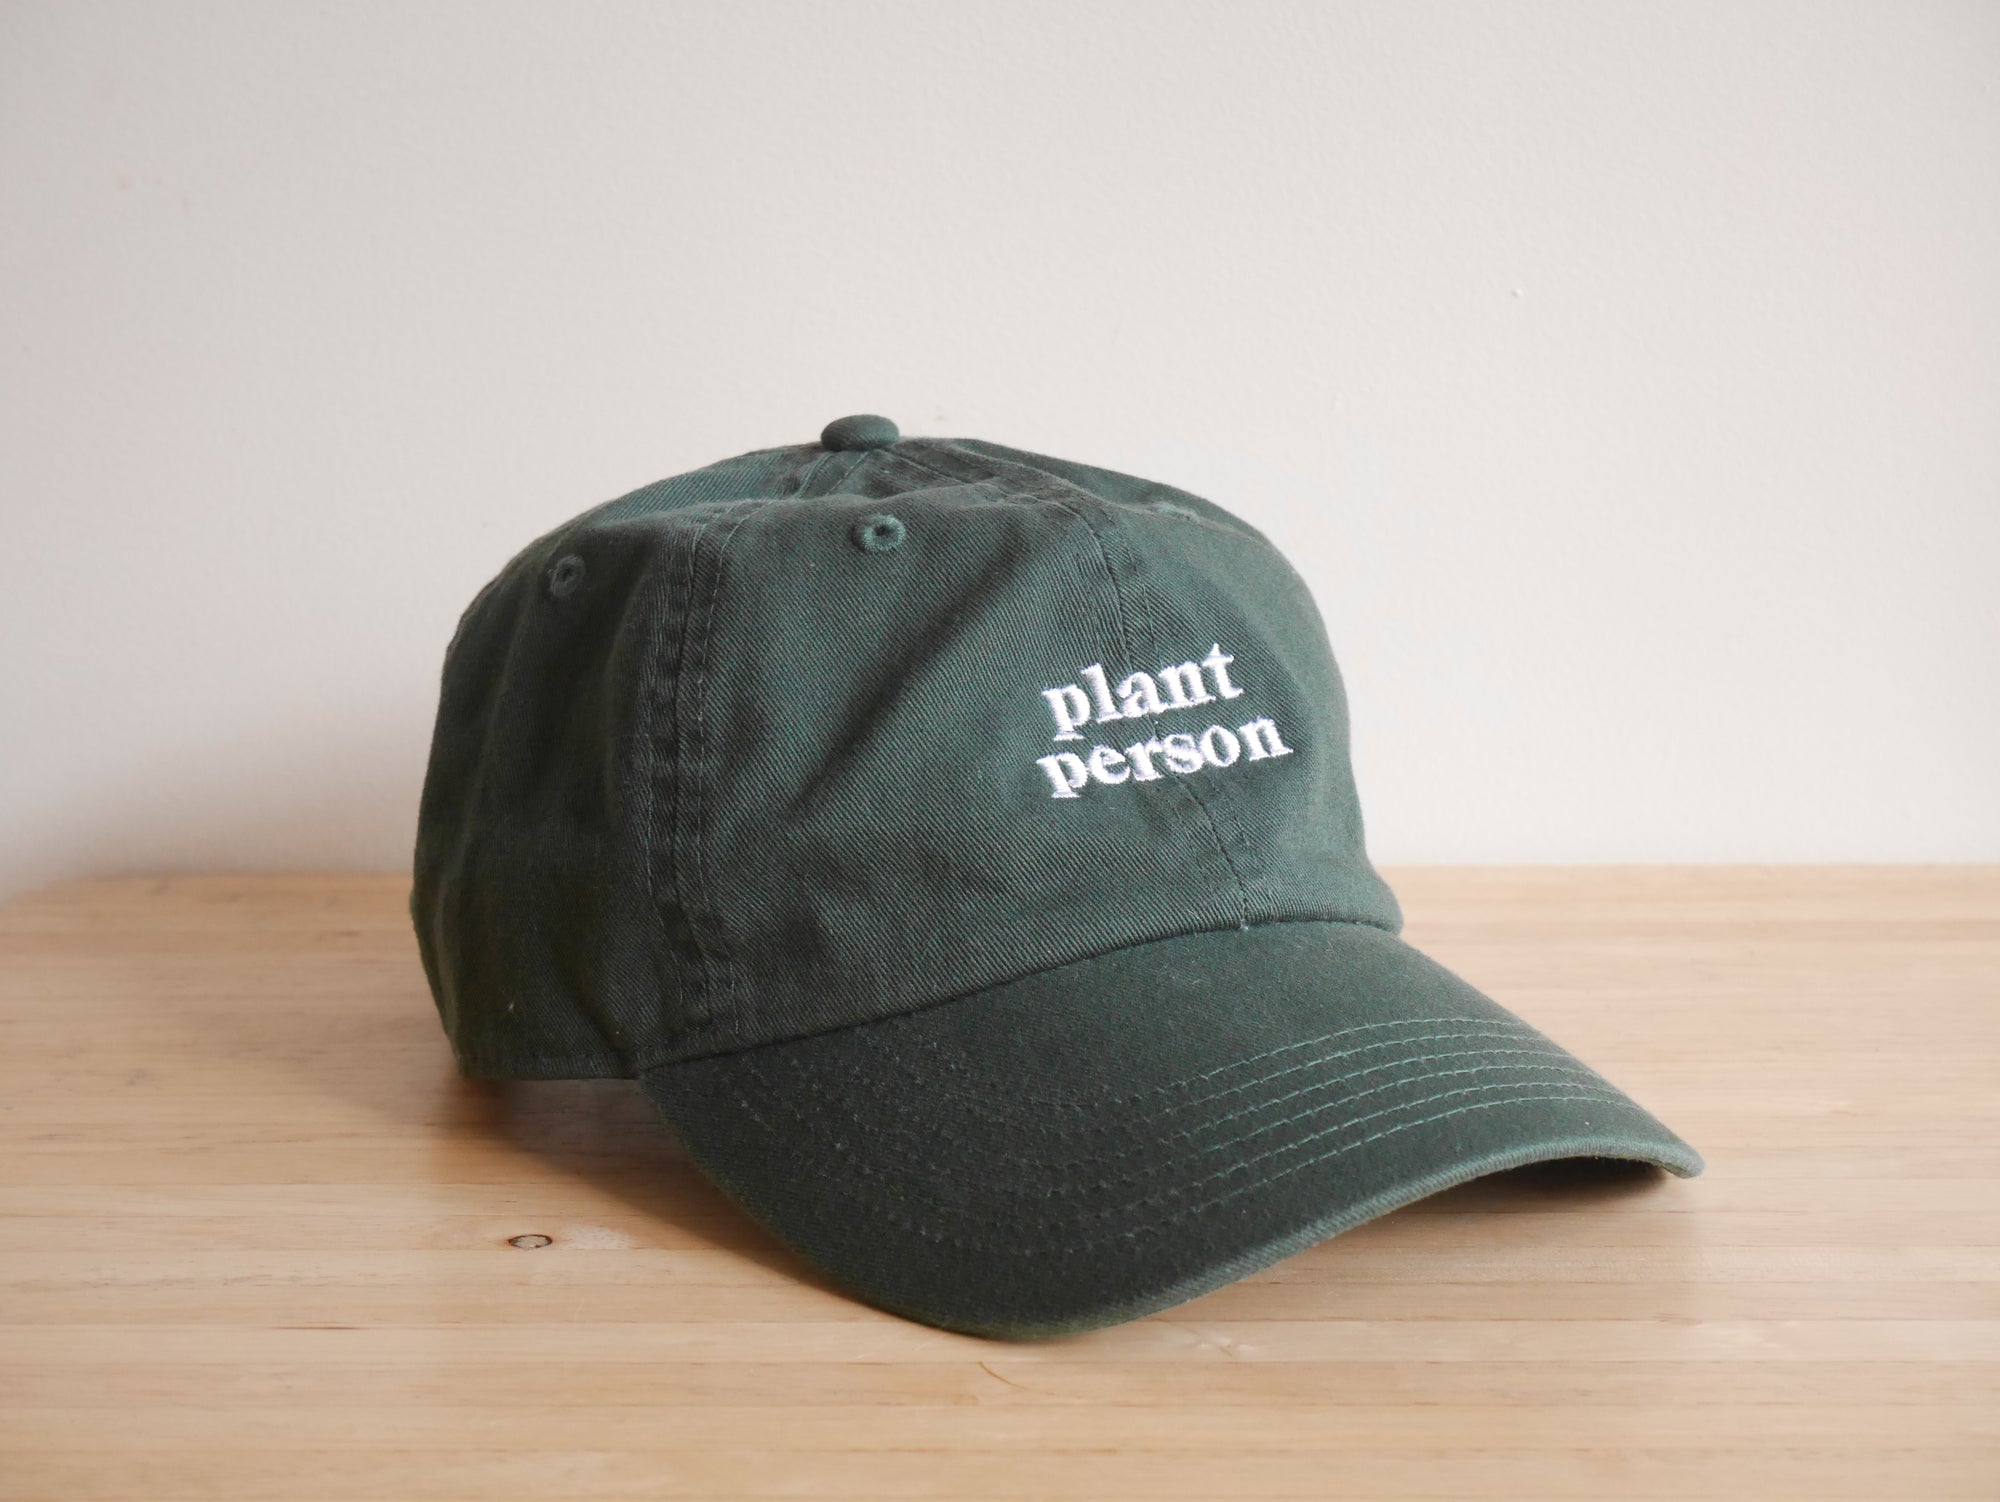 Plant caps